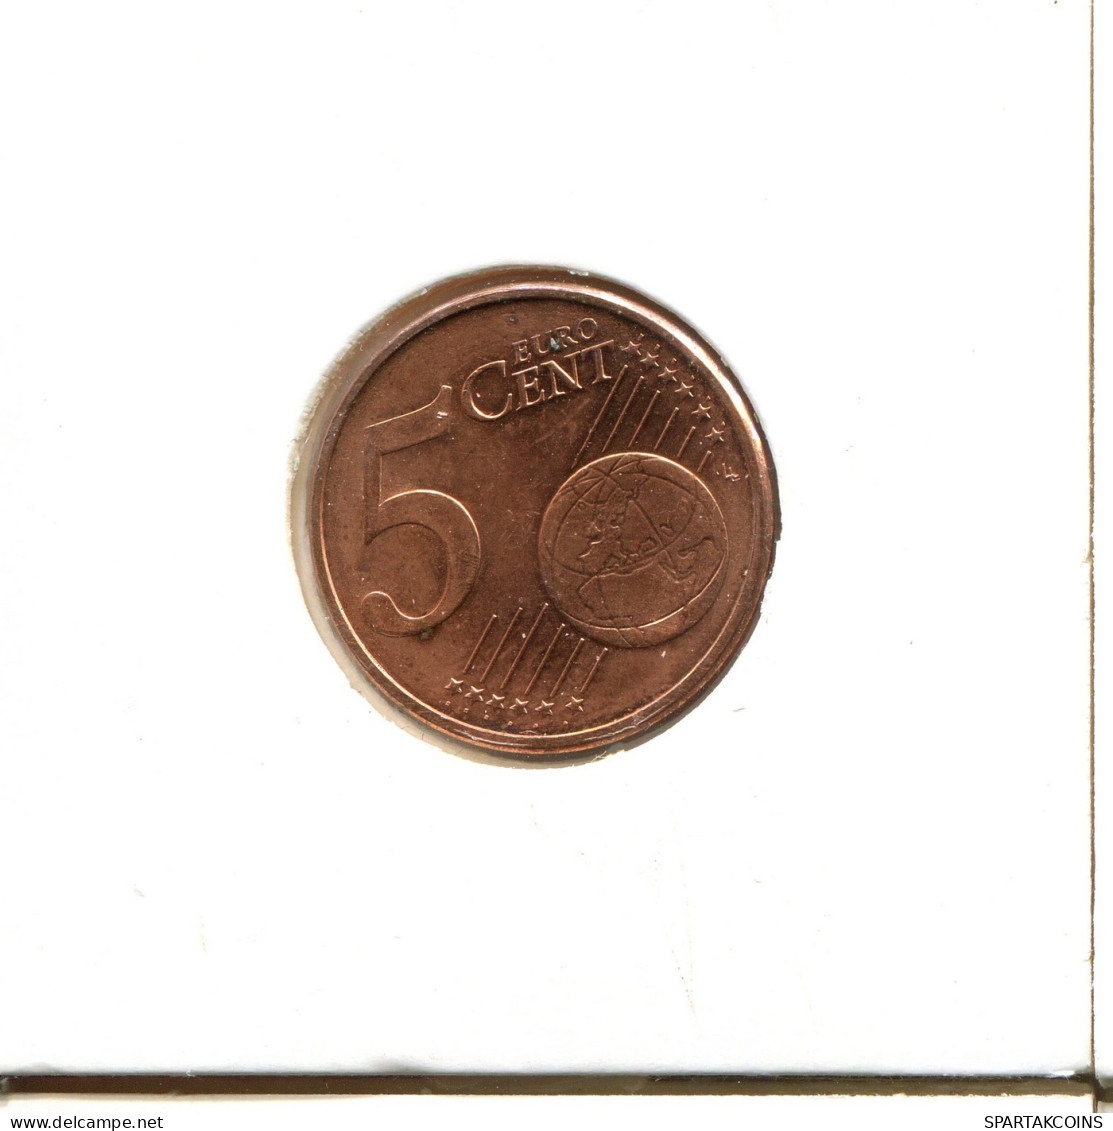 5 EURO CENTS 2014 ALEMANIA Moneda GERMANY #EU483.E.A - Deutschland